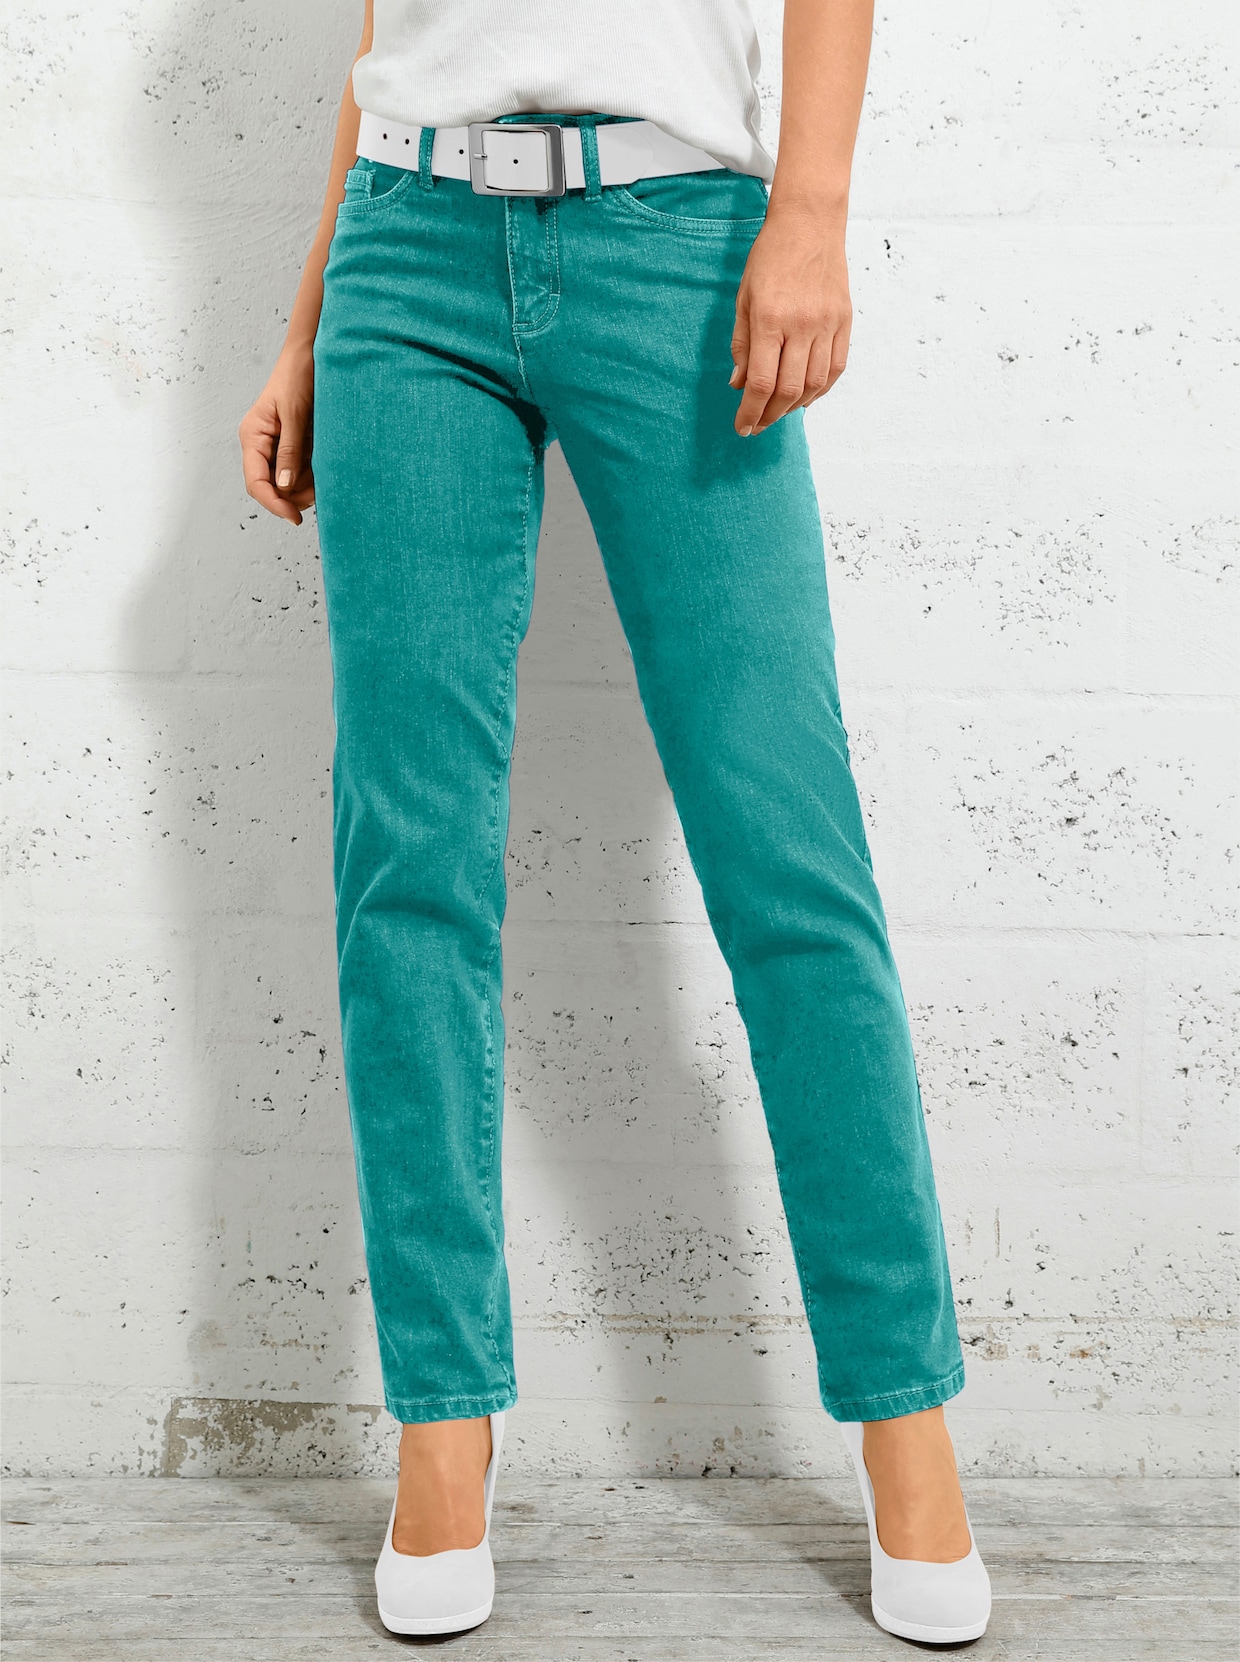 5-ficks jeans - aqua